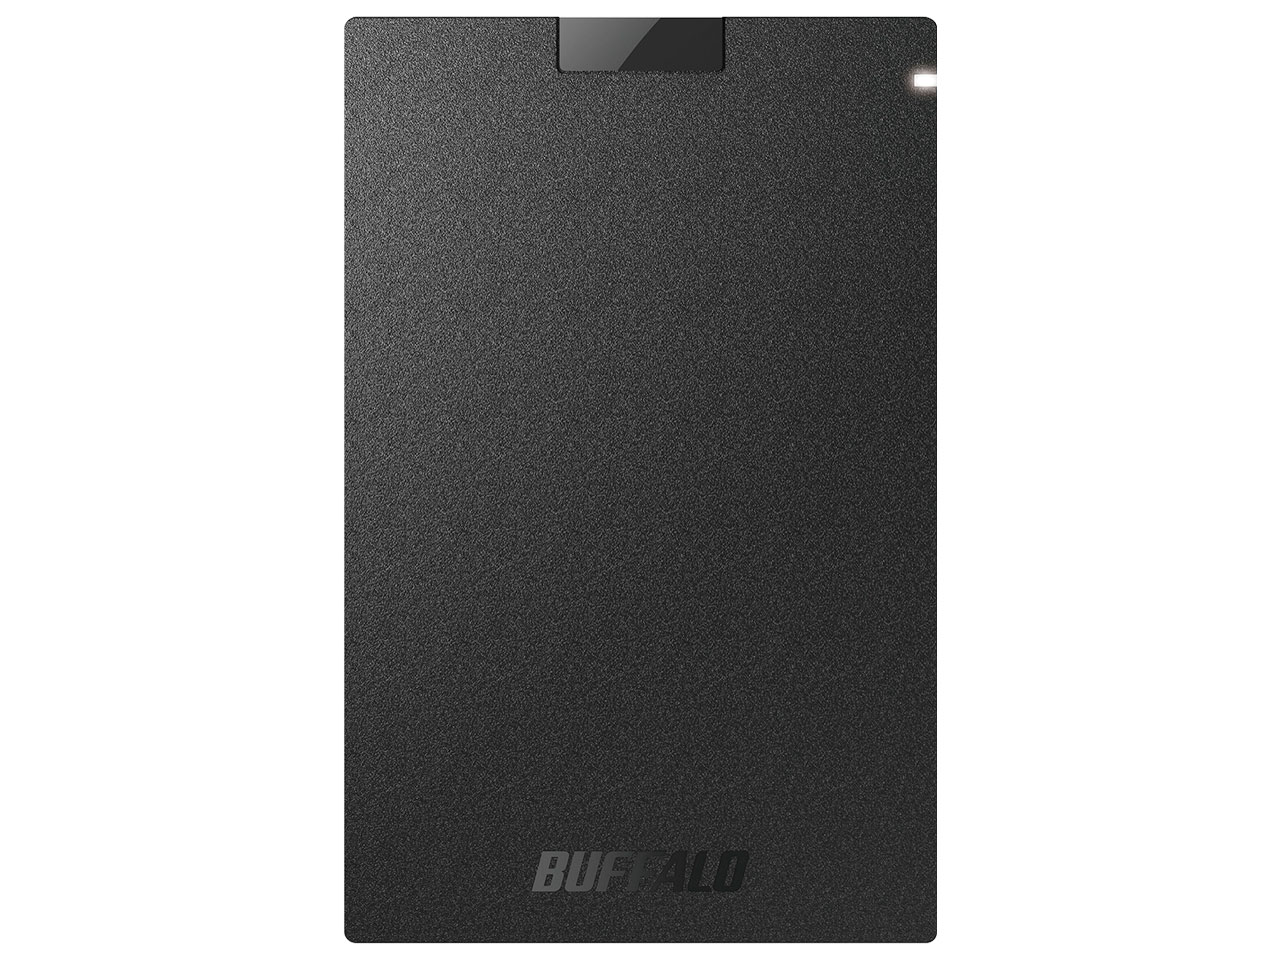 SSD-PG250U3-BC [ブラック]